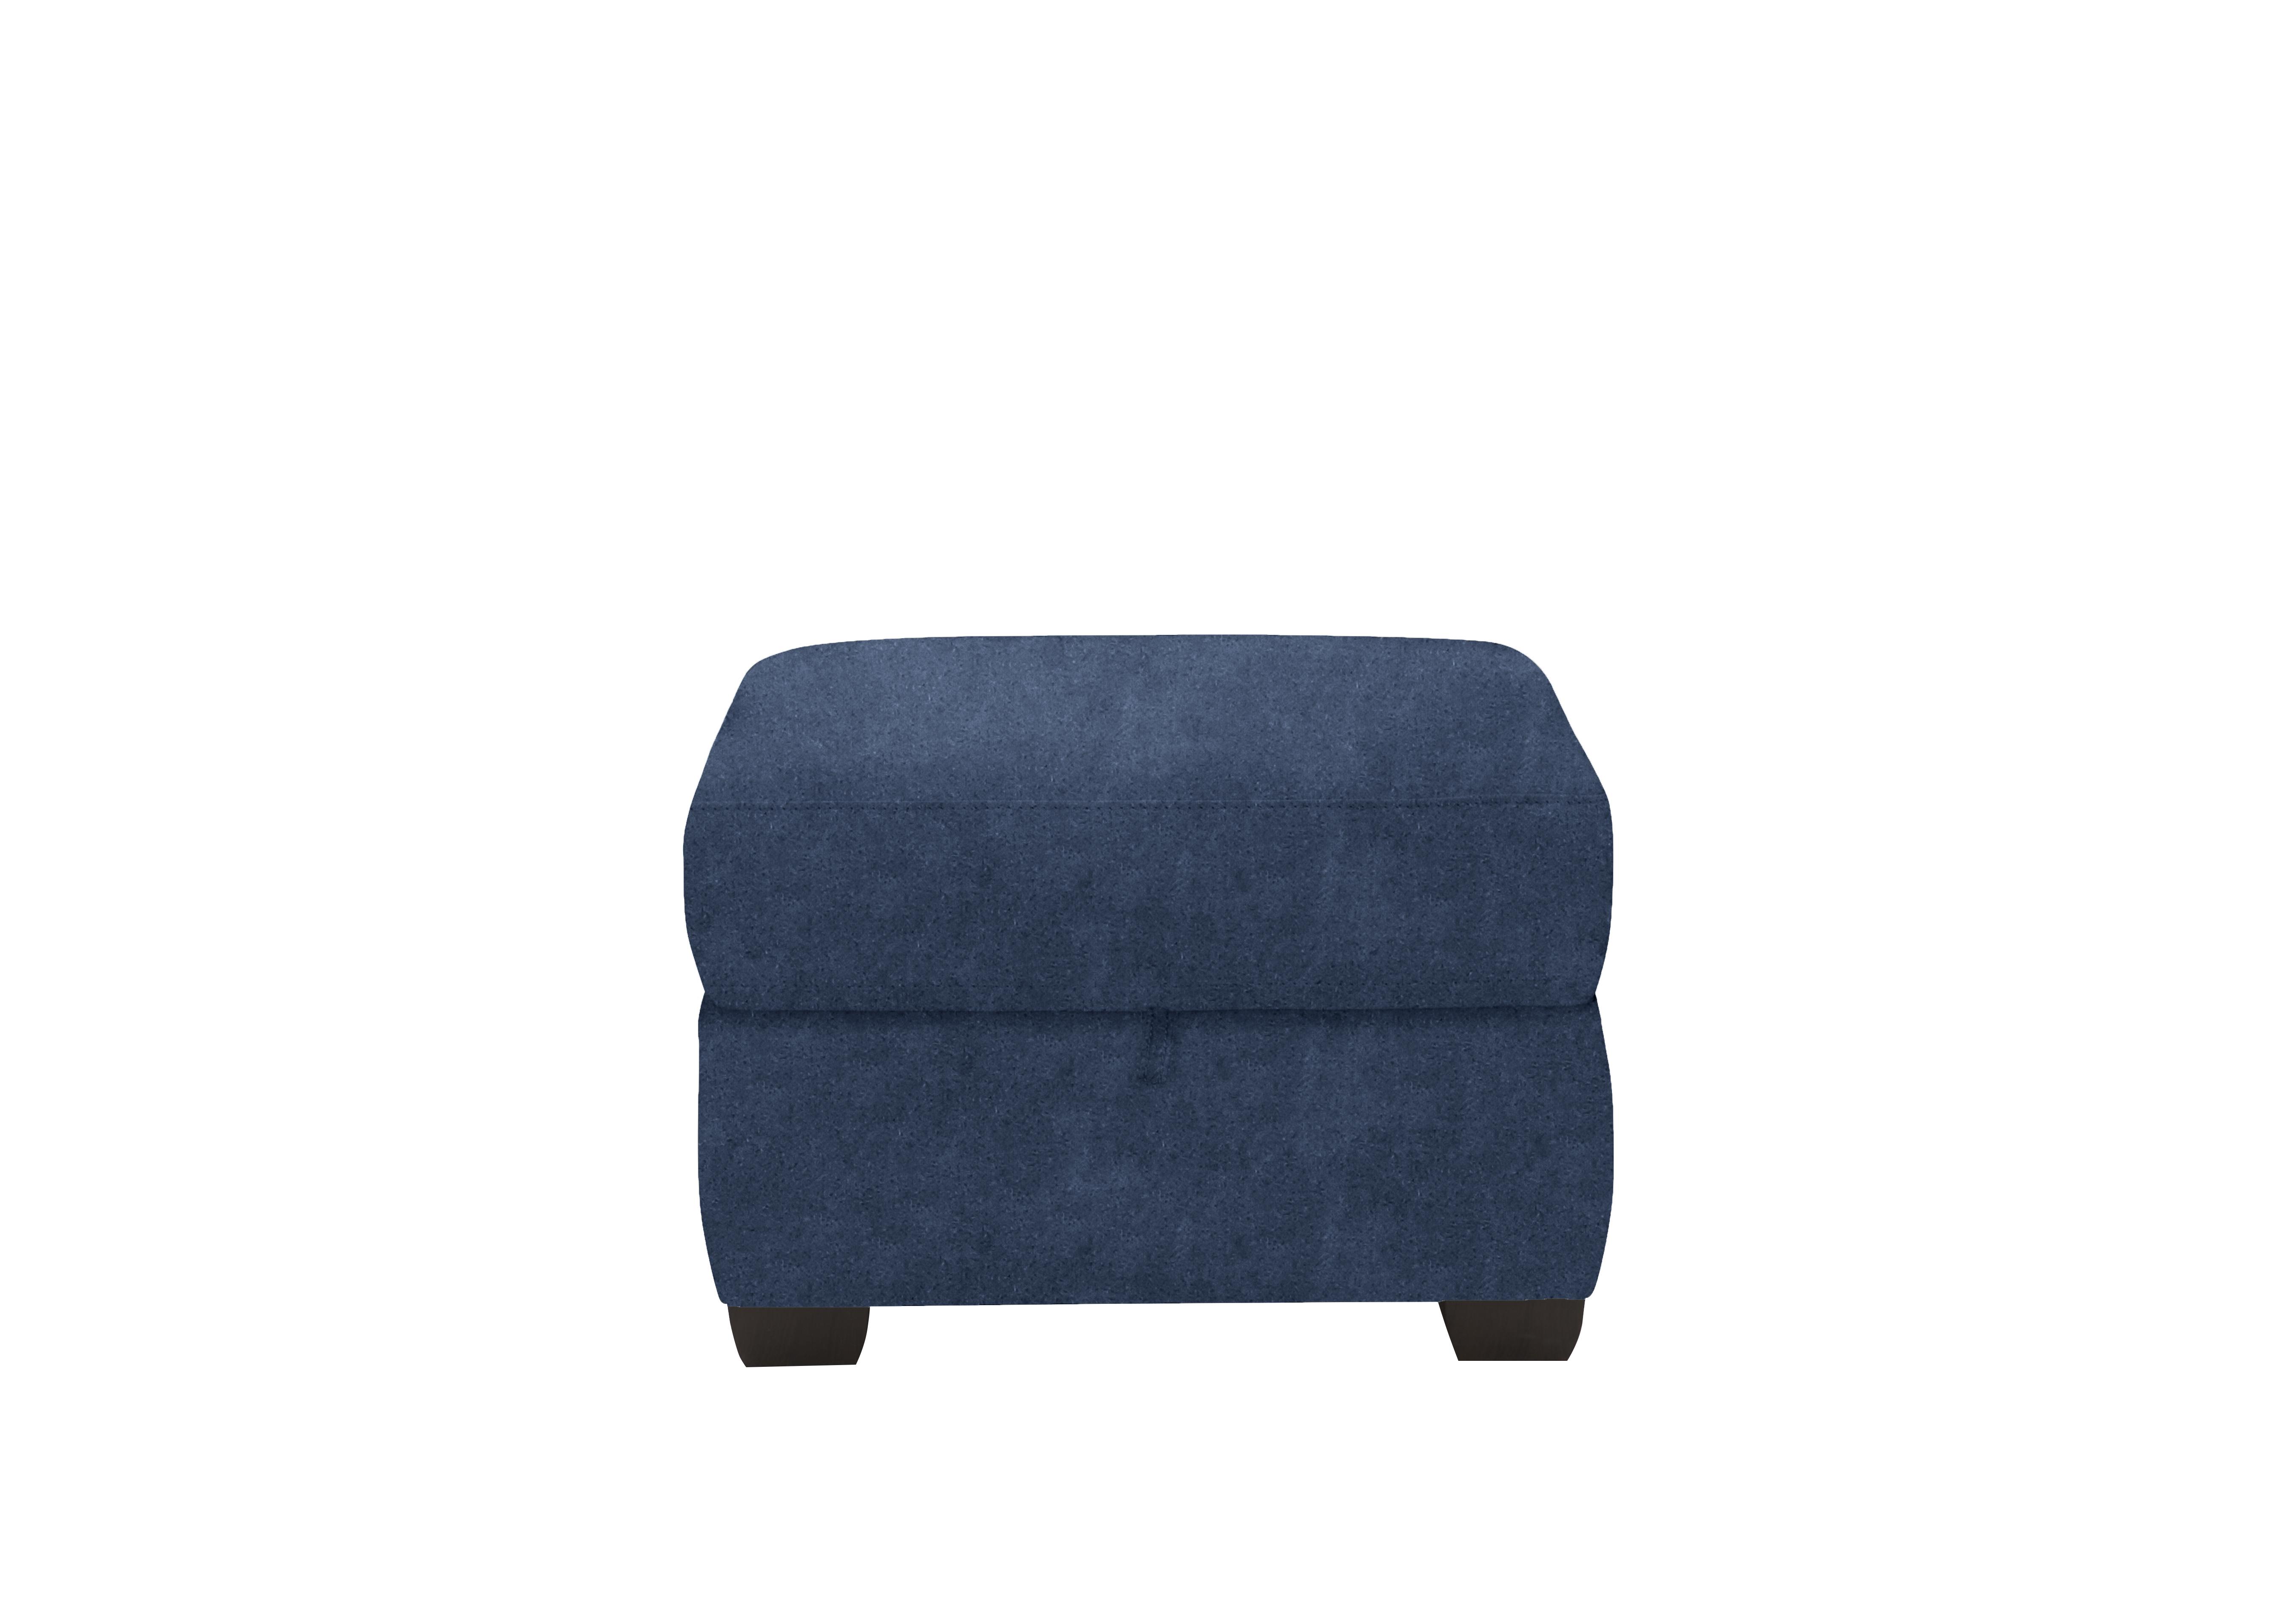 Optimus Fabric Storage Footstool in Bfa-Blj-R10 Blue on Furniture Village